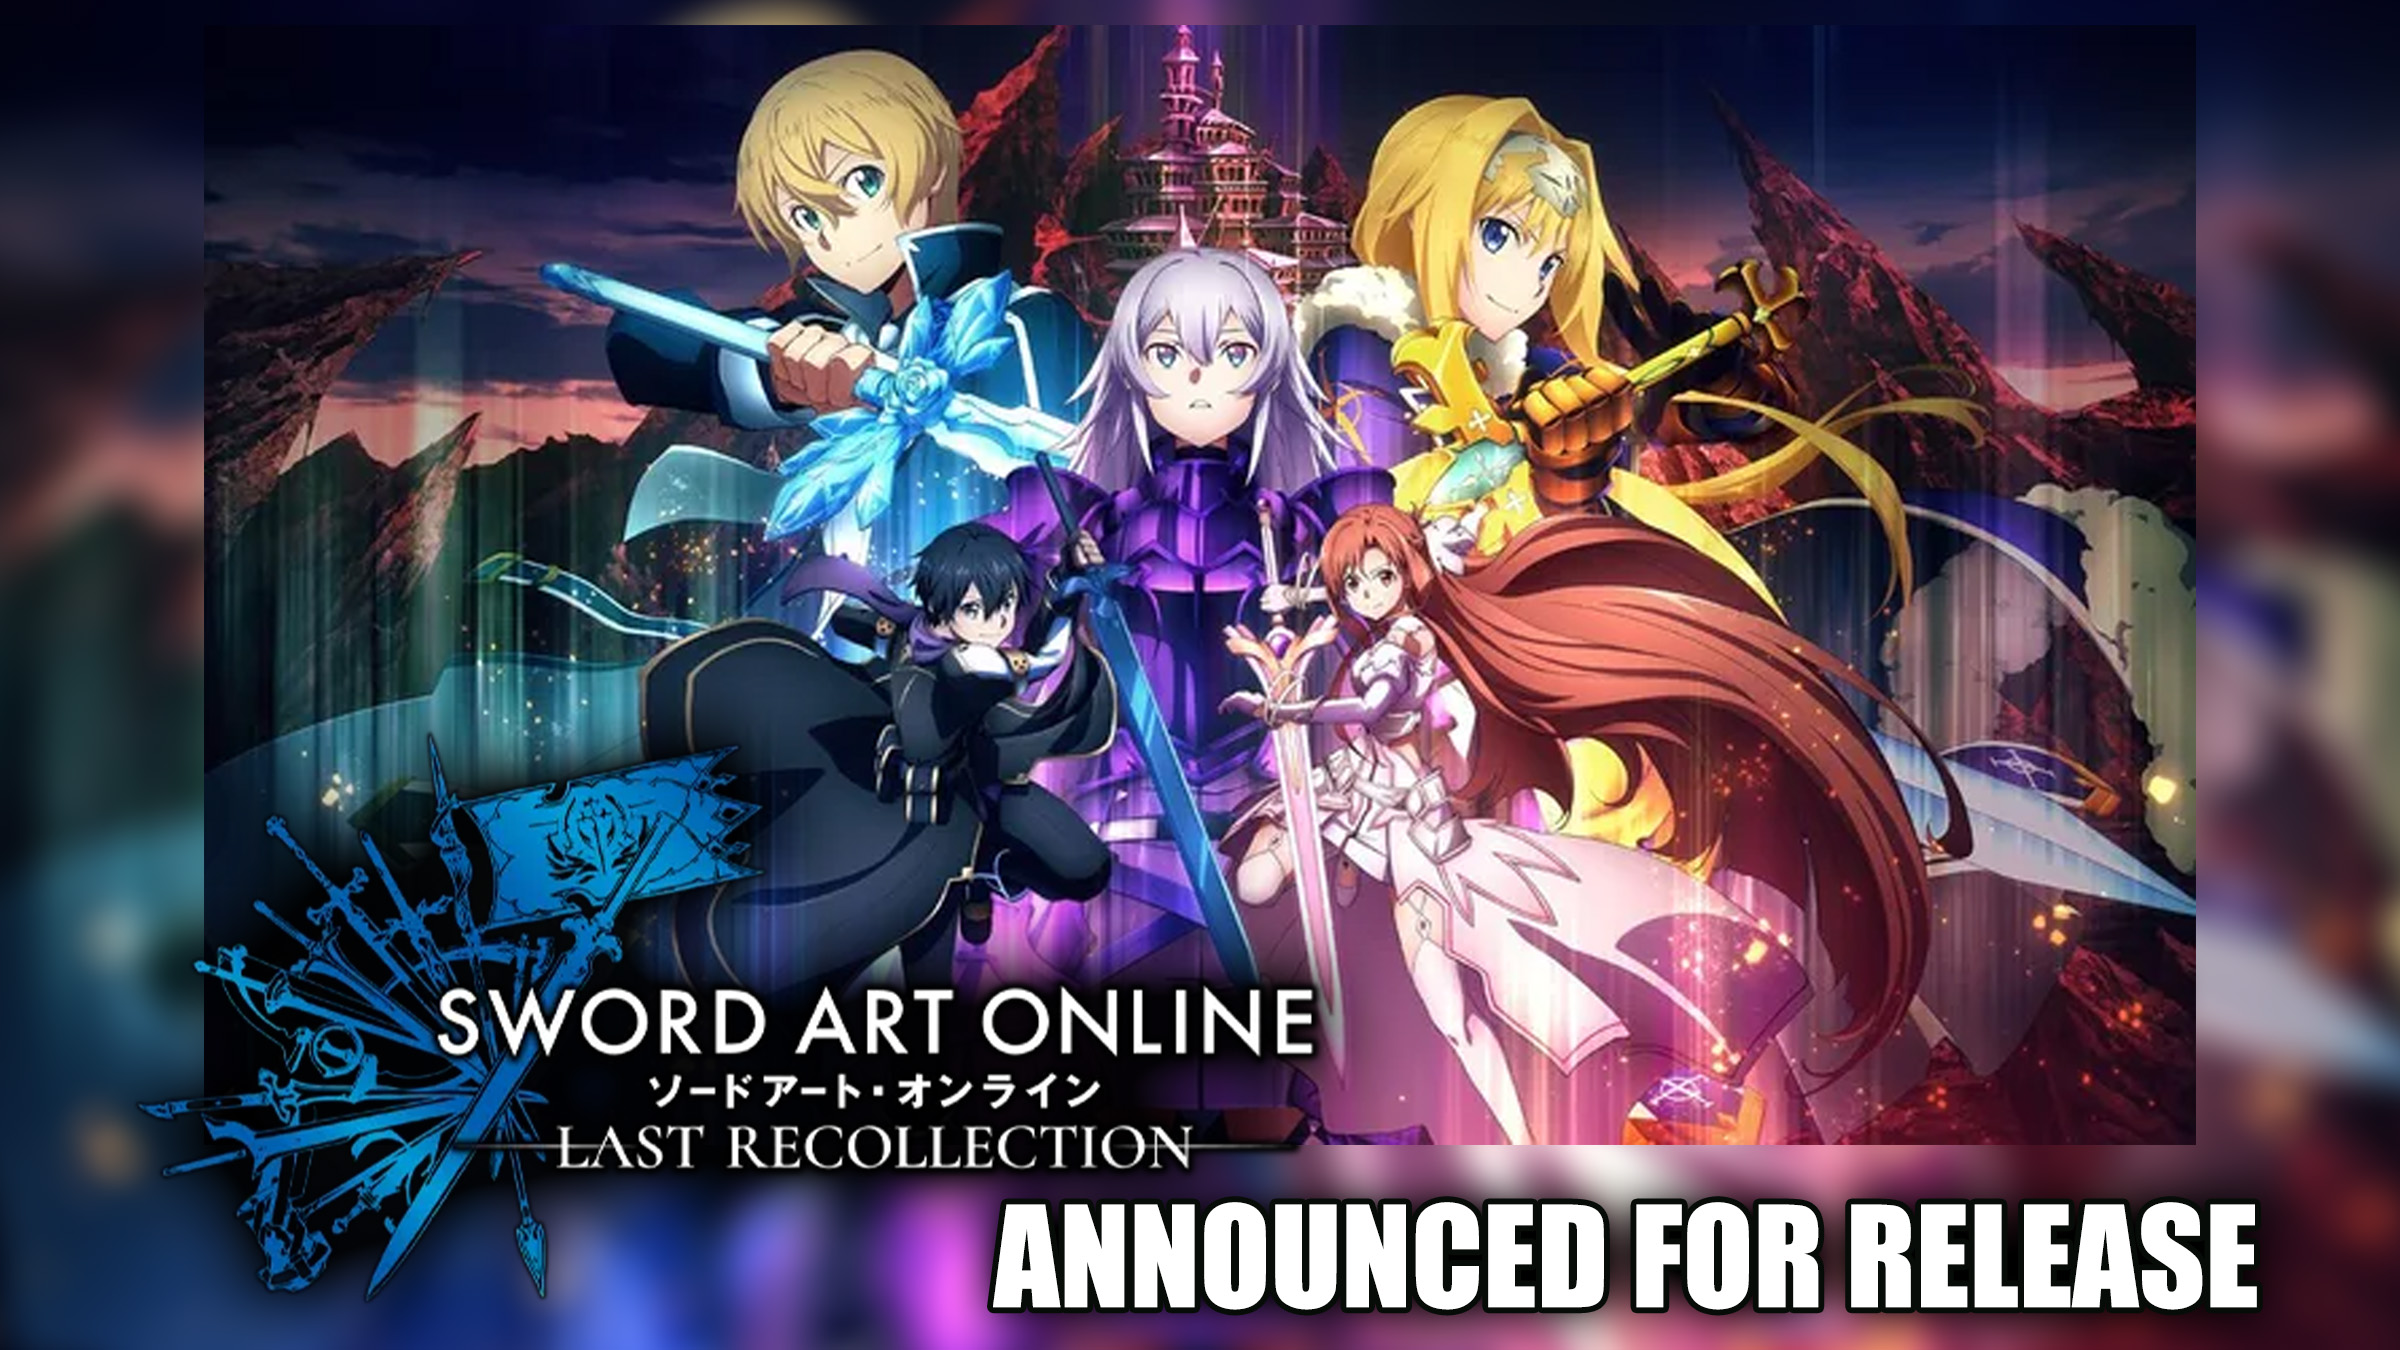 Sword Art Online Announces New Season